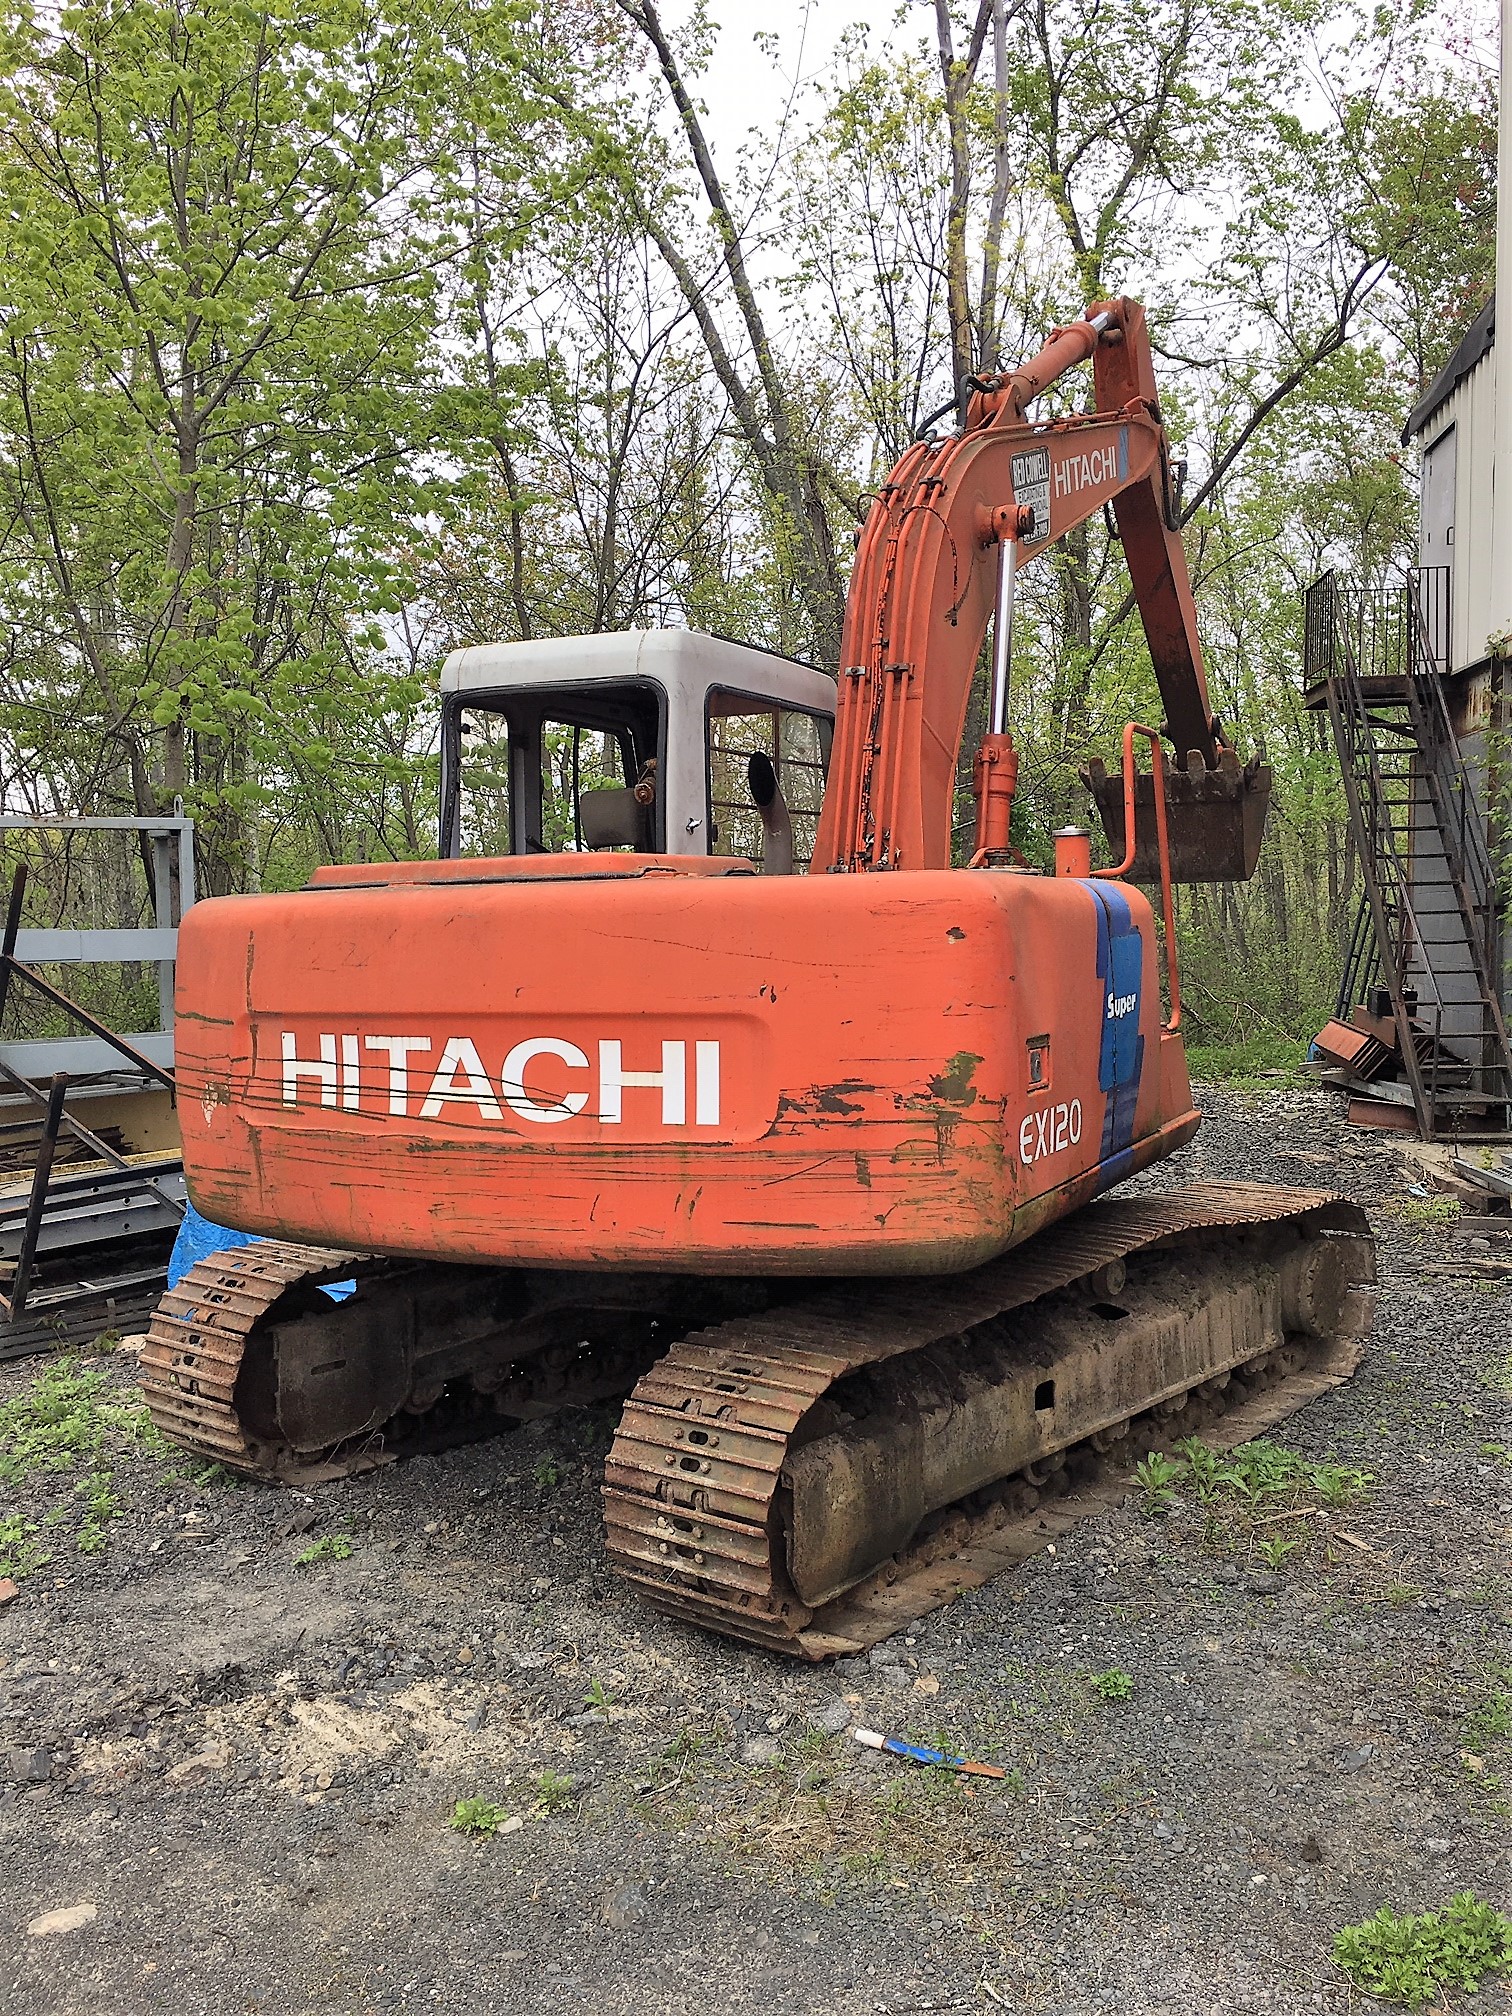 Hitachi Ex 120 2 Excavator 18500 Sold United Exchange Usa